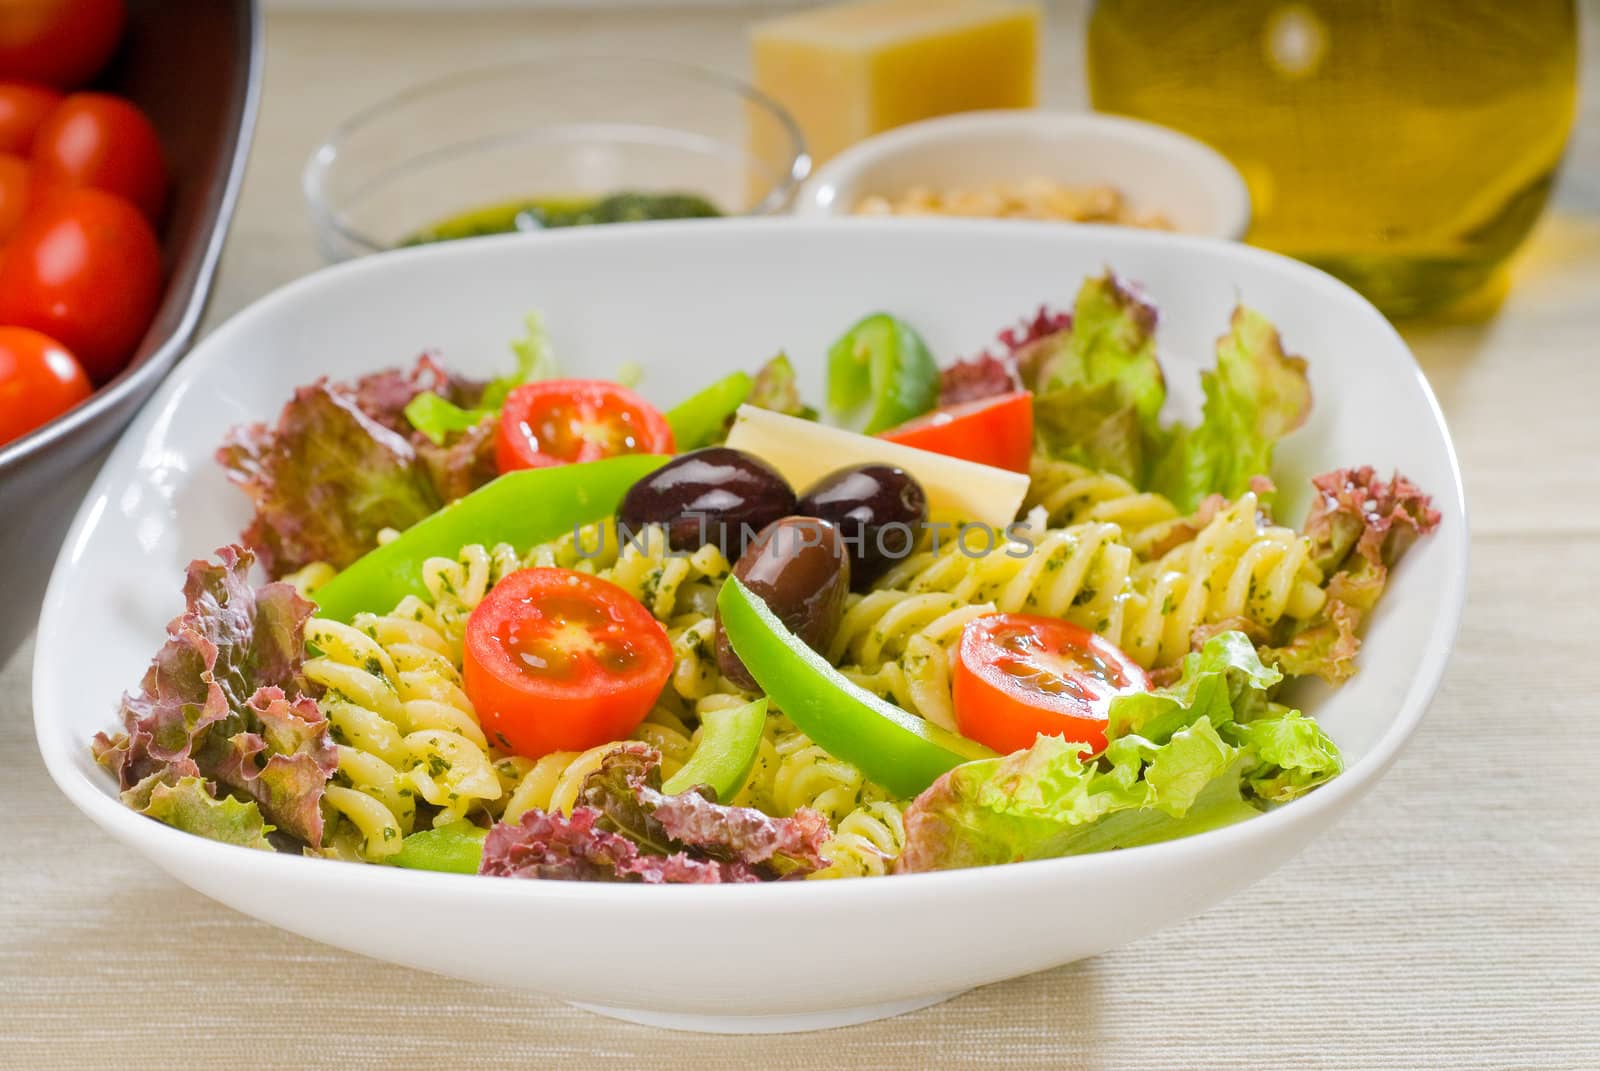 italian fusilli pasta salad by keko64